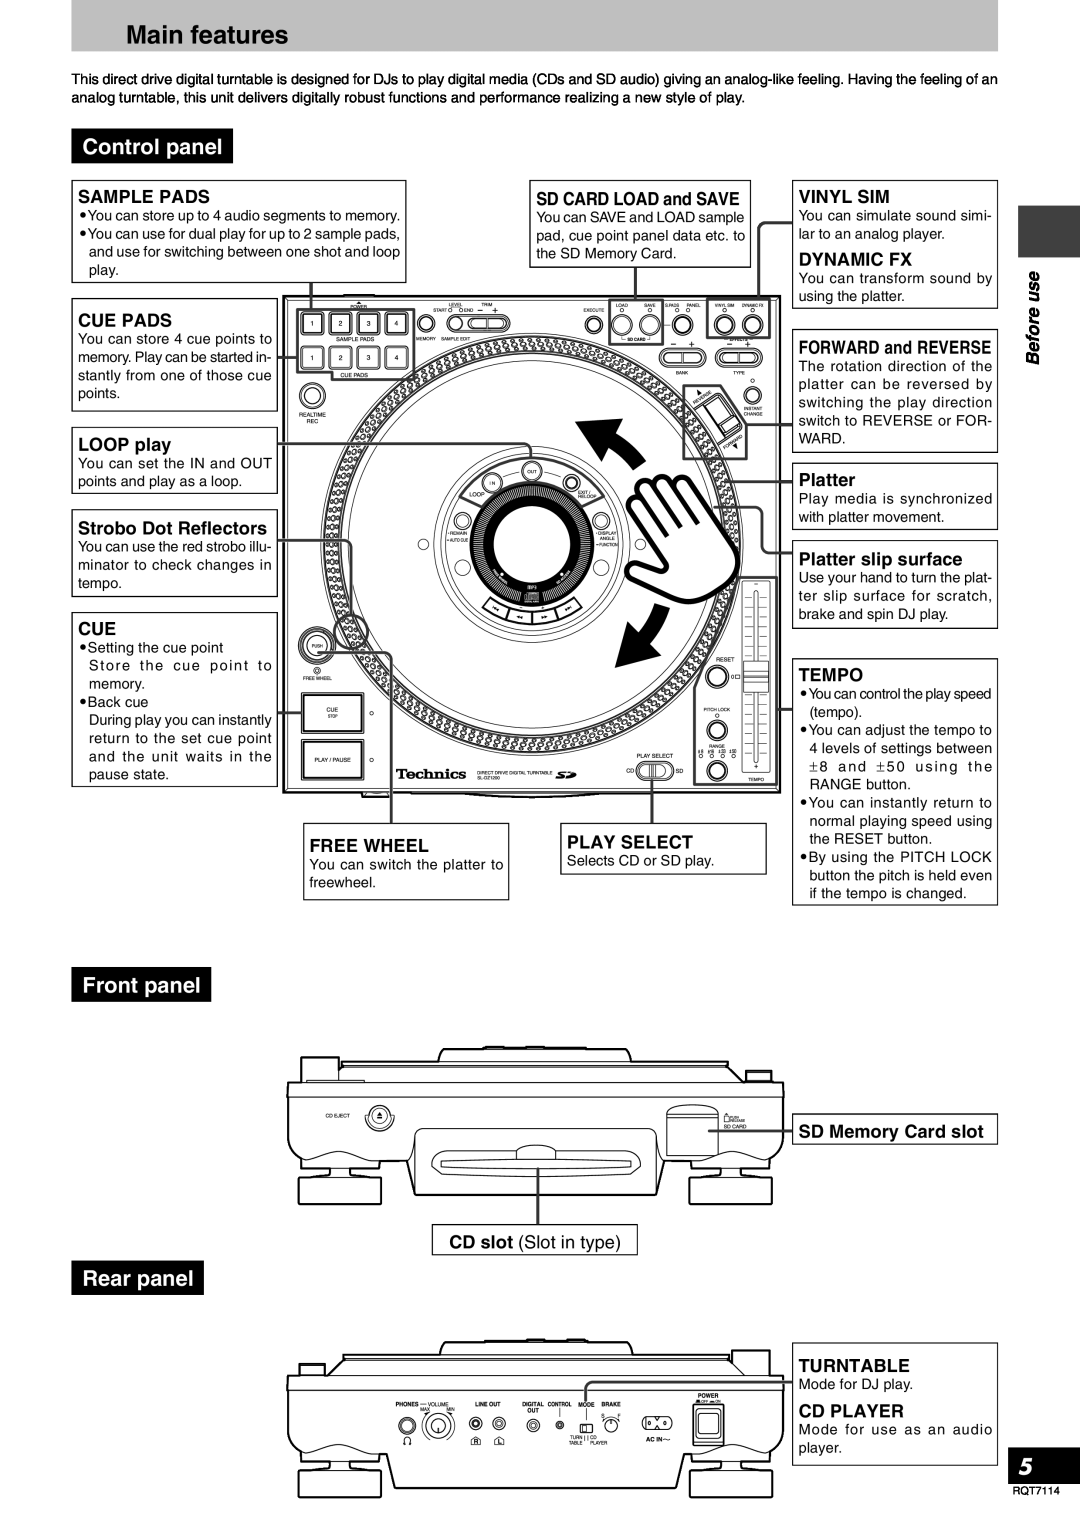 Panasonic SLDZ1200 Main features, Control panel, Front panel, Rear panel, Sample Pads, Cue Pads, LOOP play, Vinyl Sim 